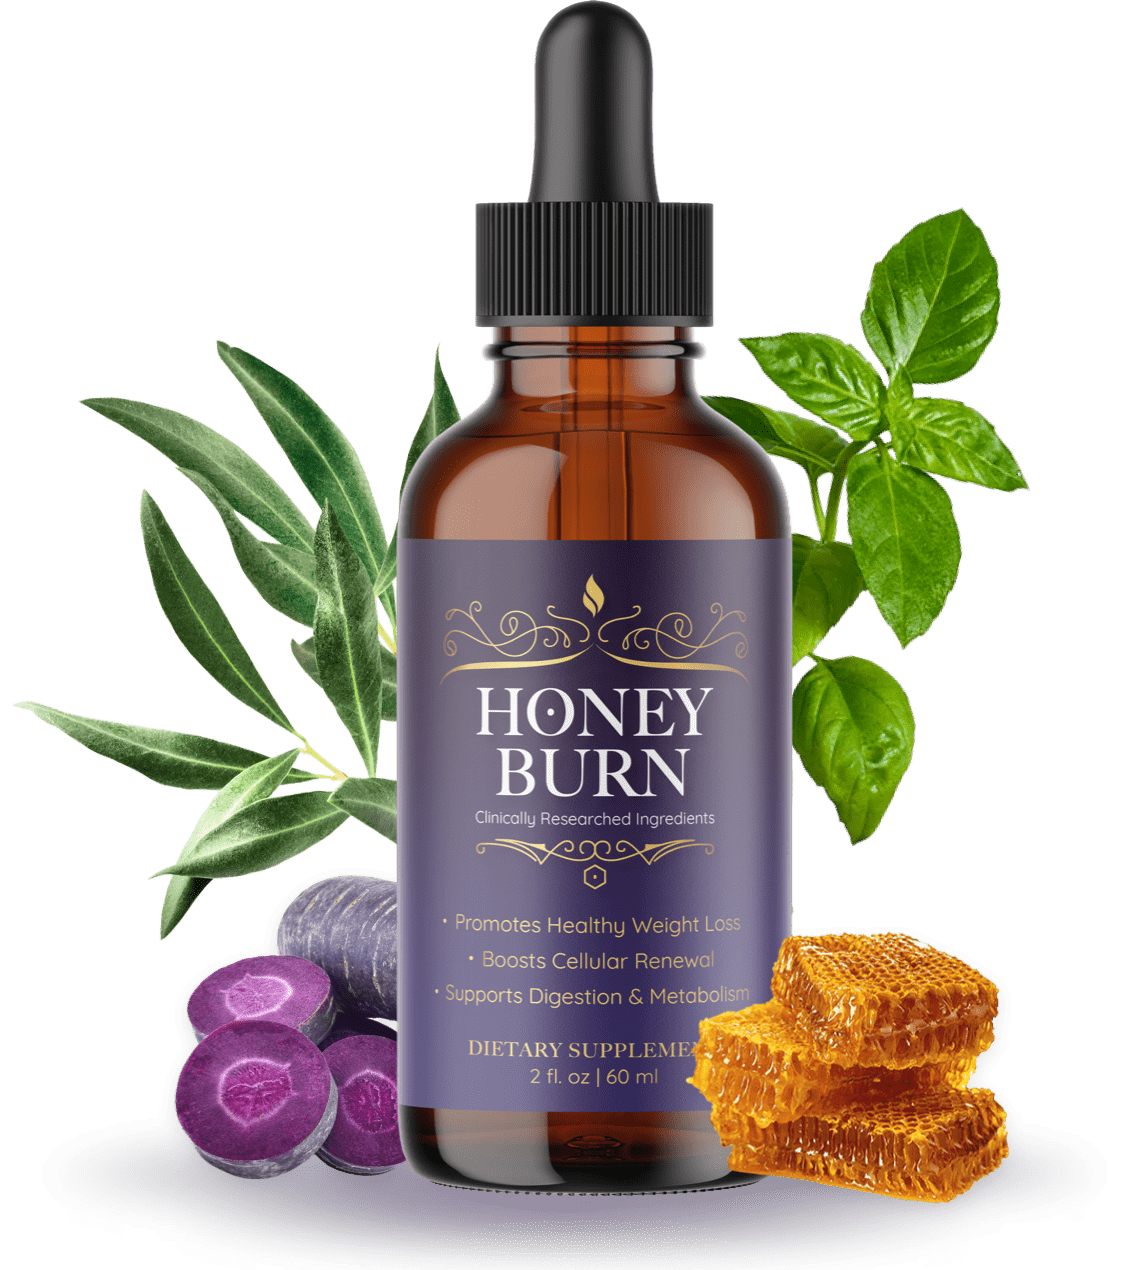 HoneyBurn: Your secret weapon for shedding pounds